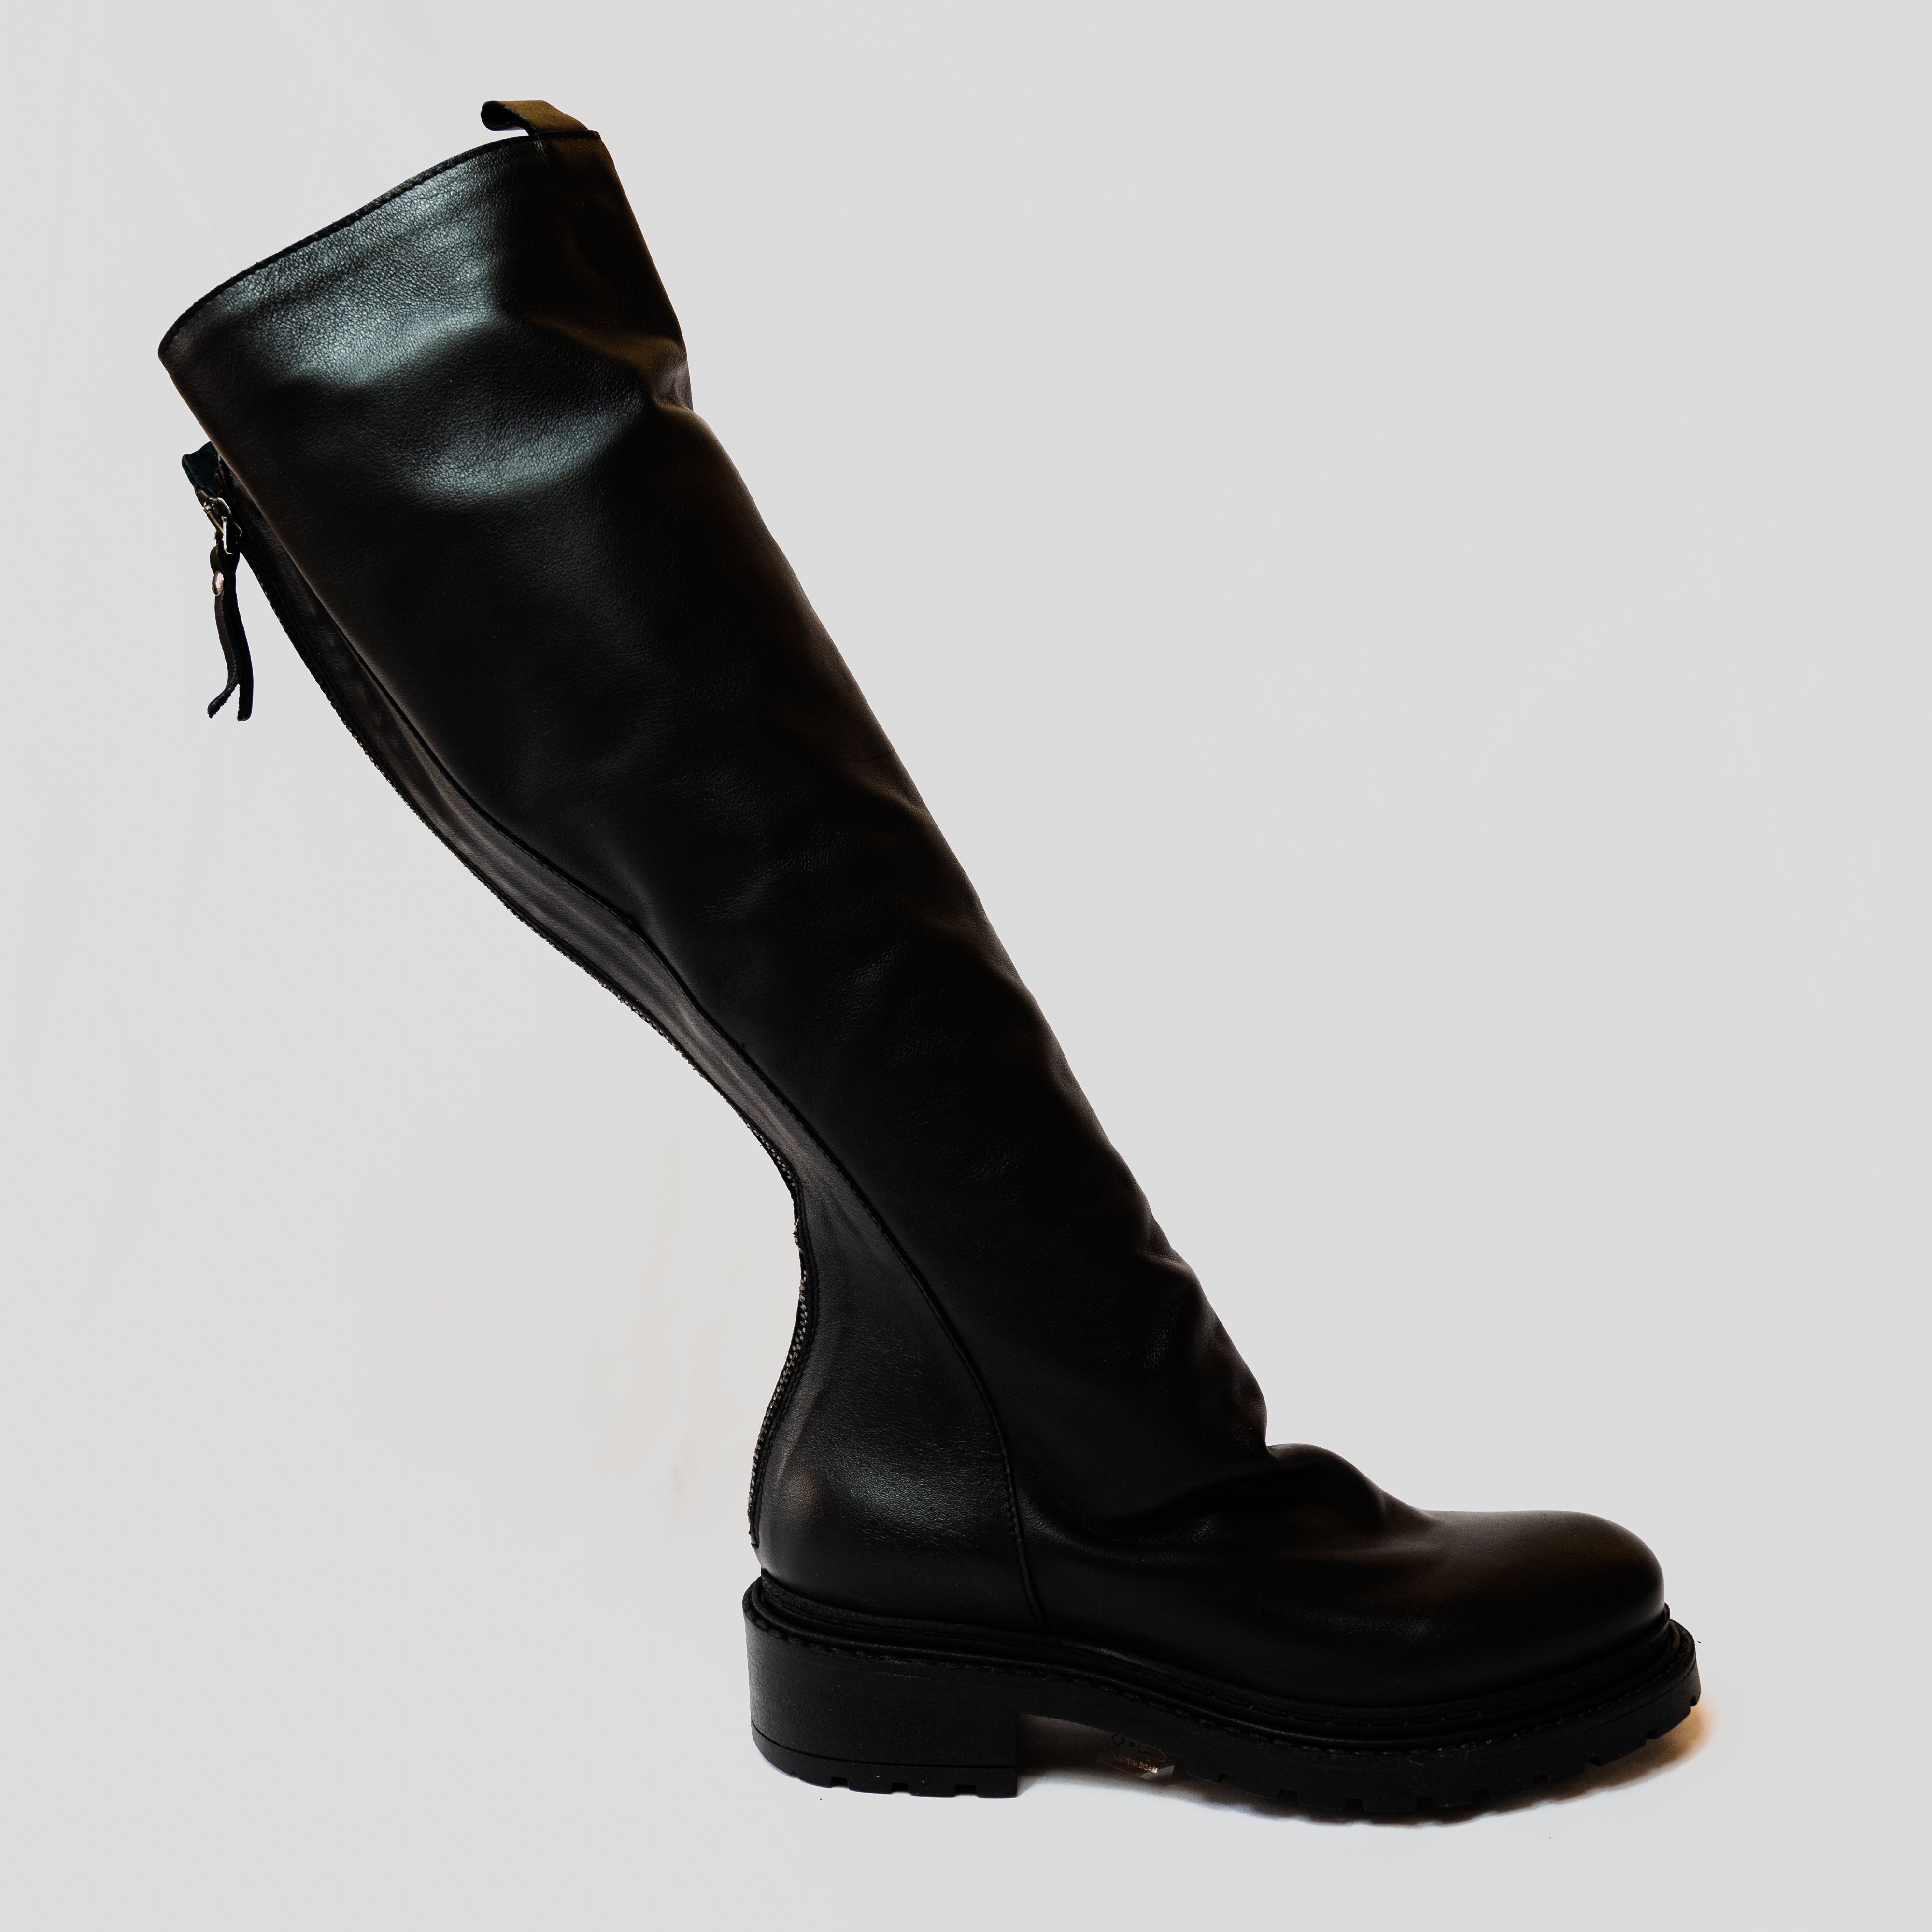 Metisse - Stivali in pelle neri alti con zip